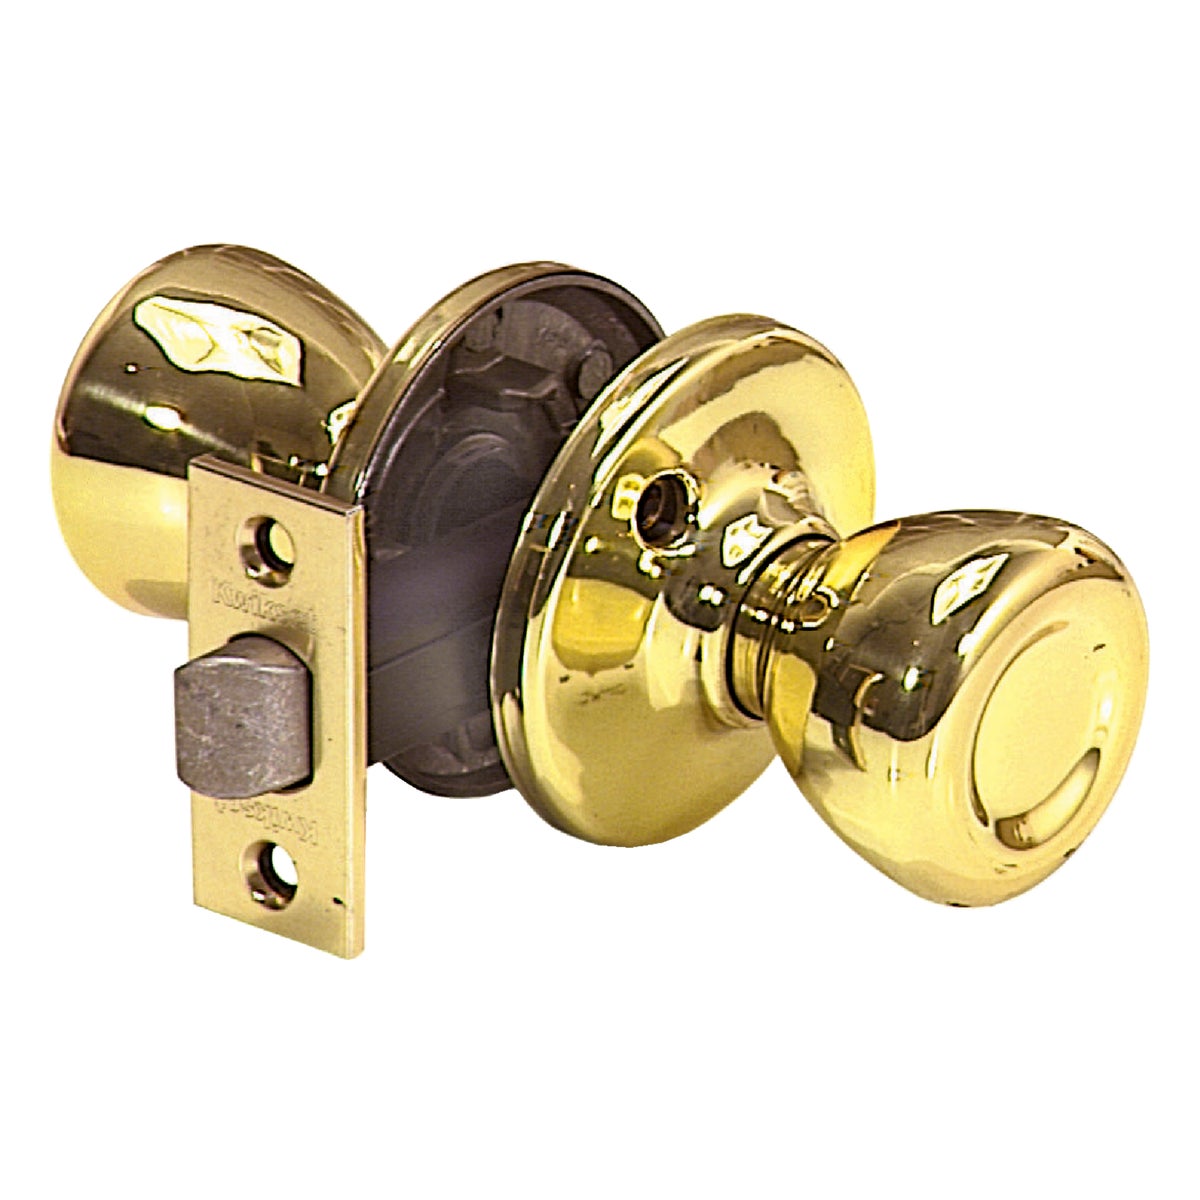 Item 229602, Passage knob. Adjustable steel latch fits 2-3/8" and 2-3/4" backsets.